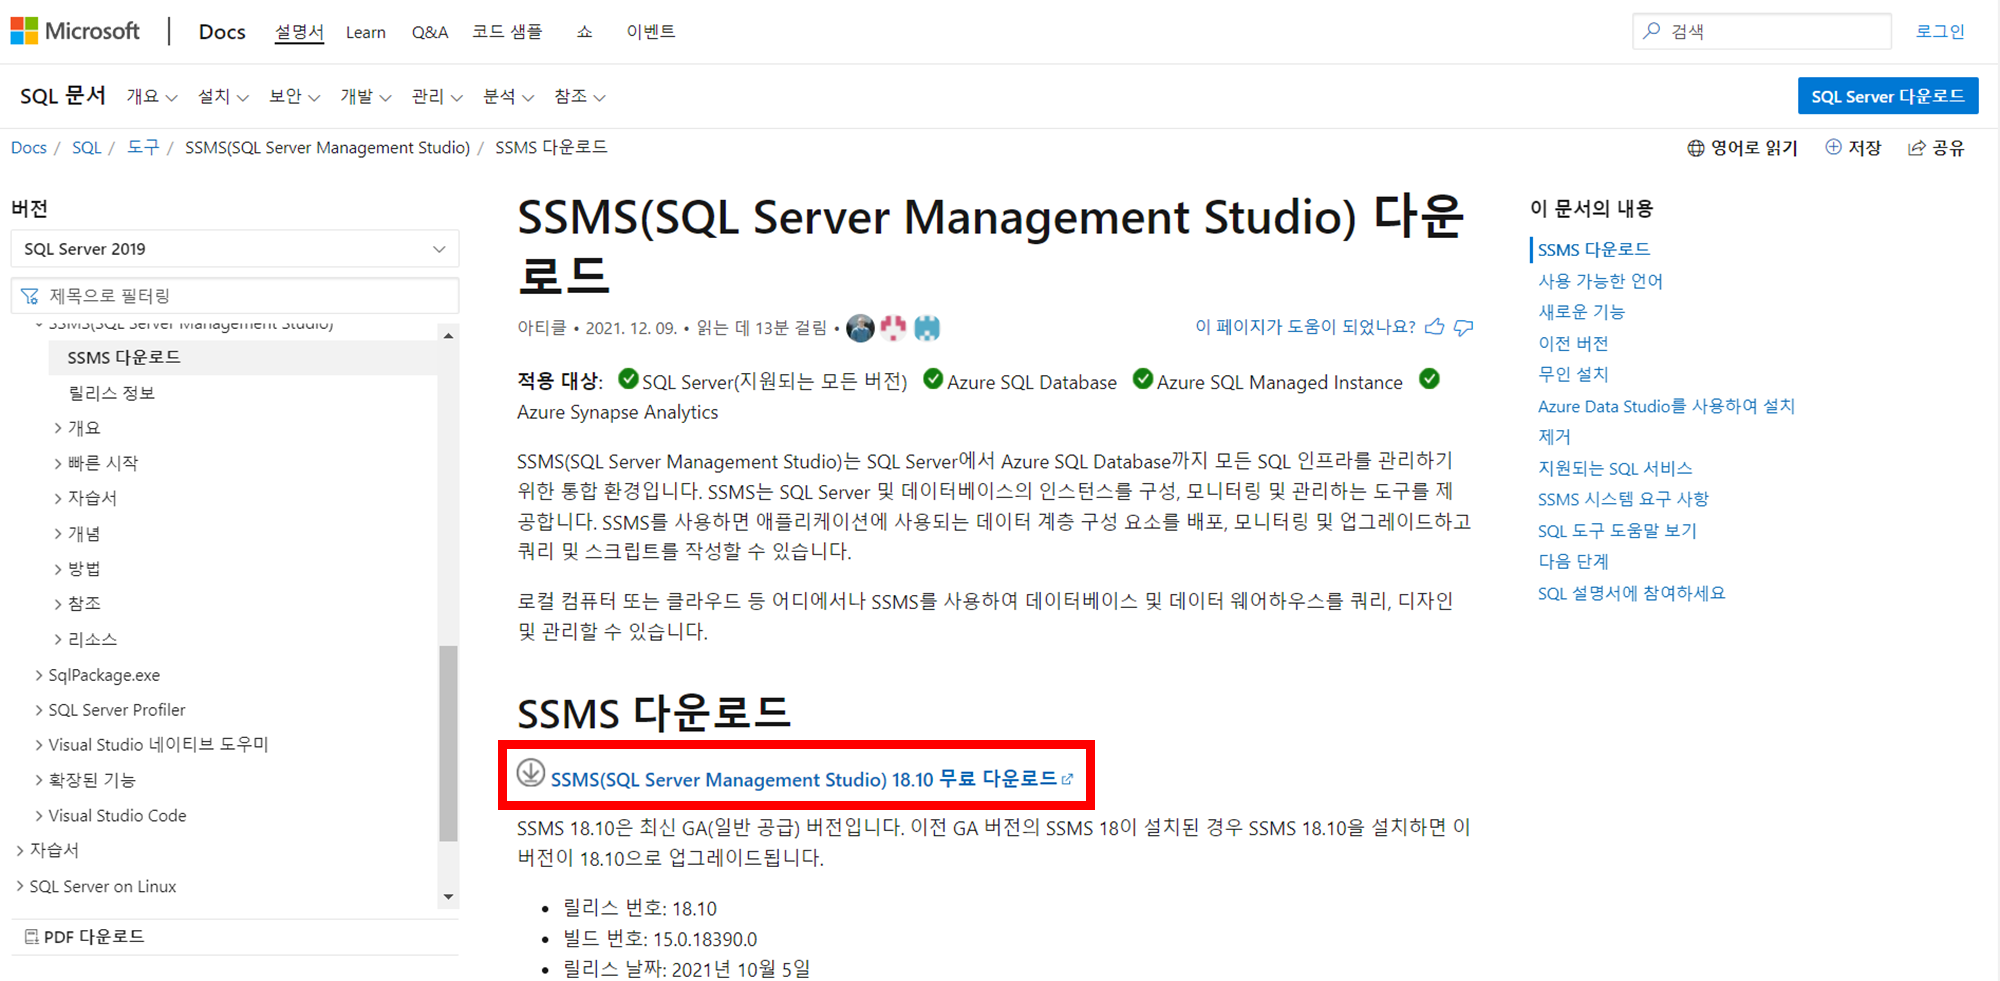 SSMS(SQL Server Management Studio) 18.10 무료 다운로드 클릭합니다.